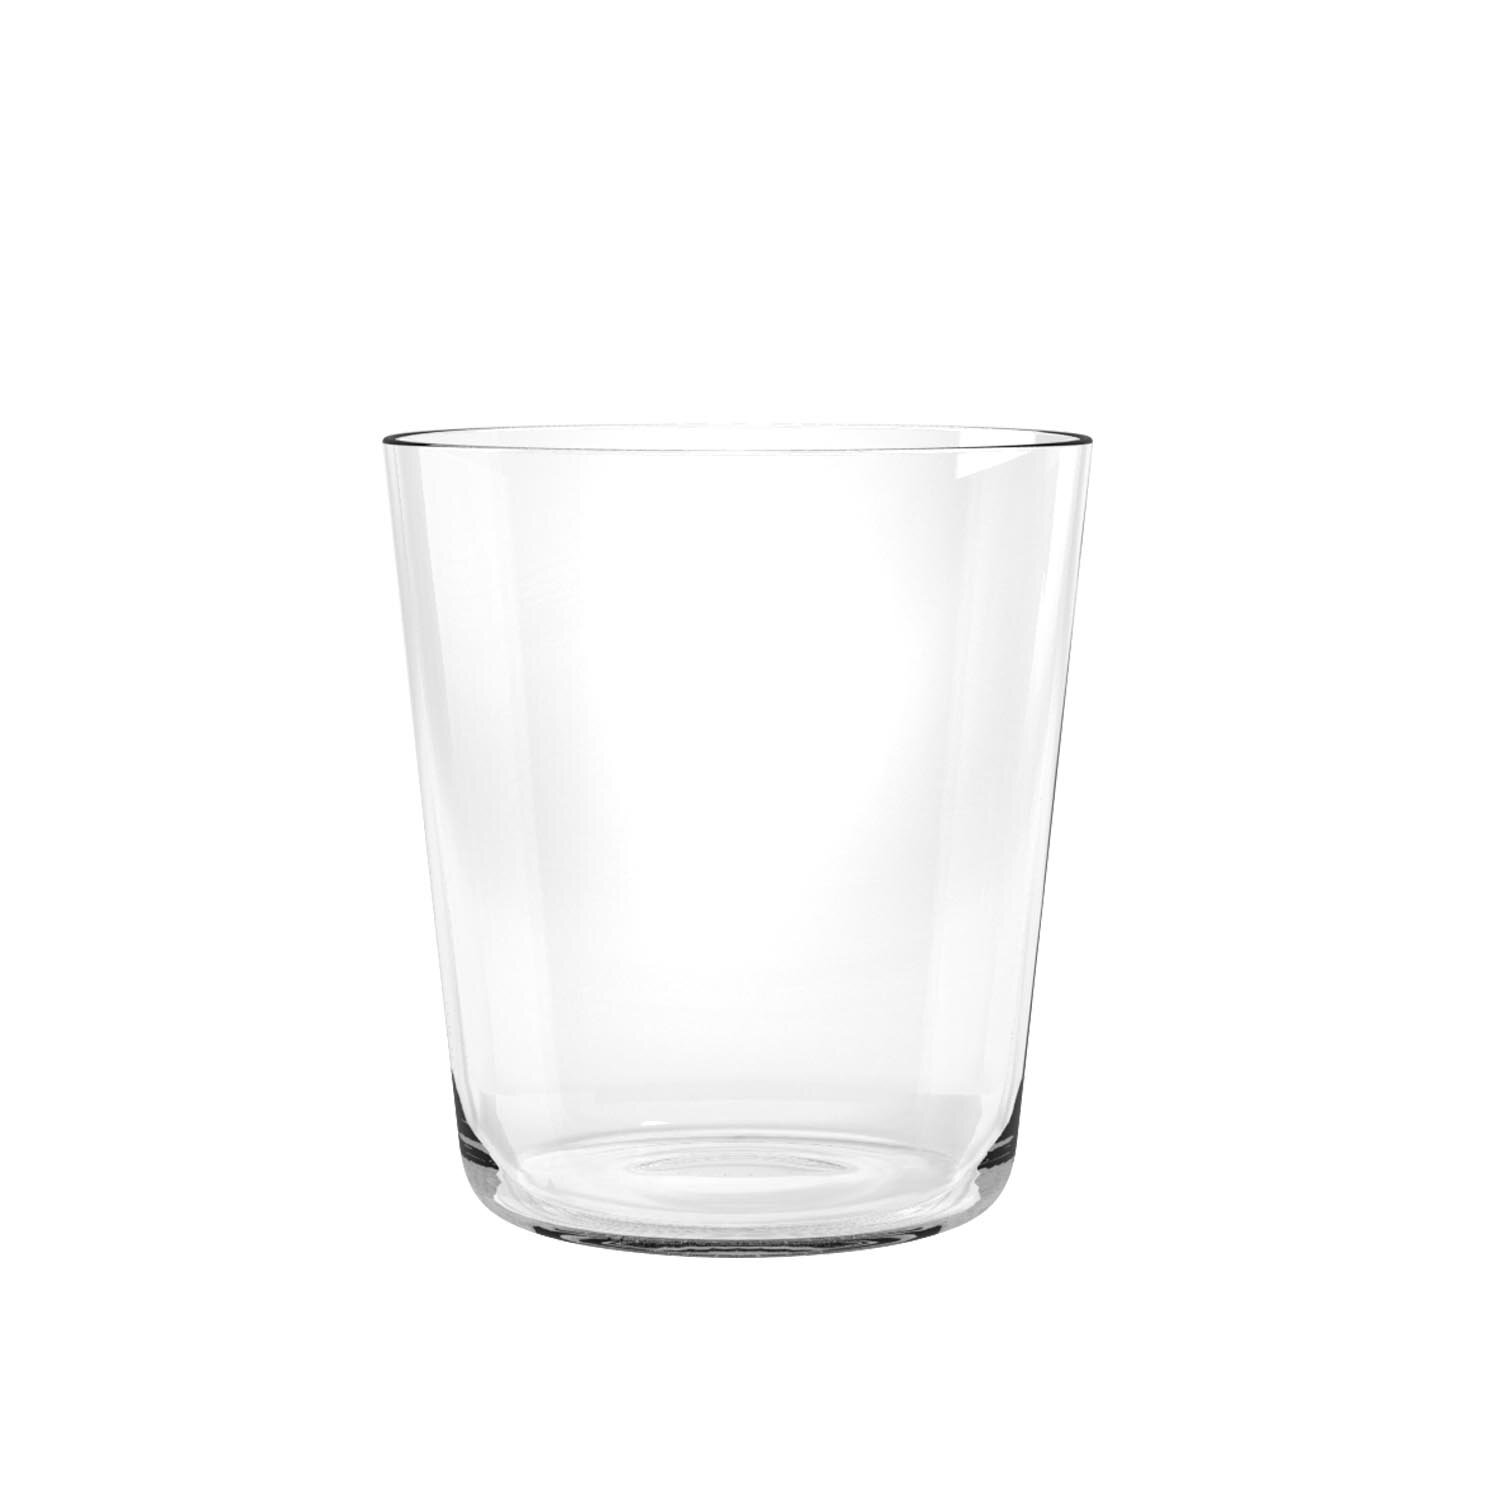 Ivy Bronx Funchess 8 - Piece 16oz. Acrylic Drinking Glass